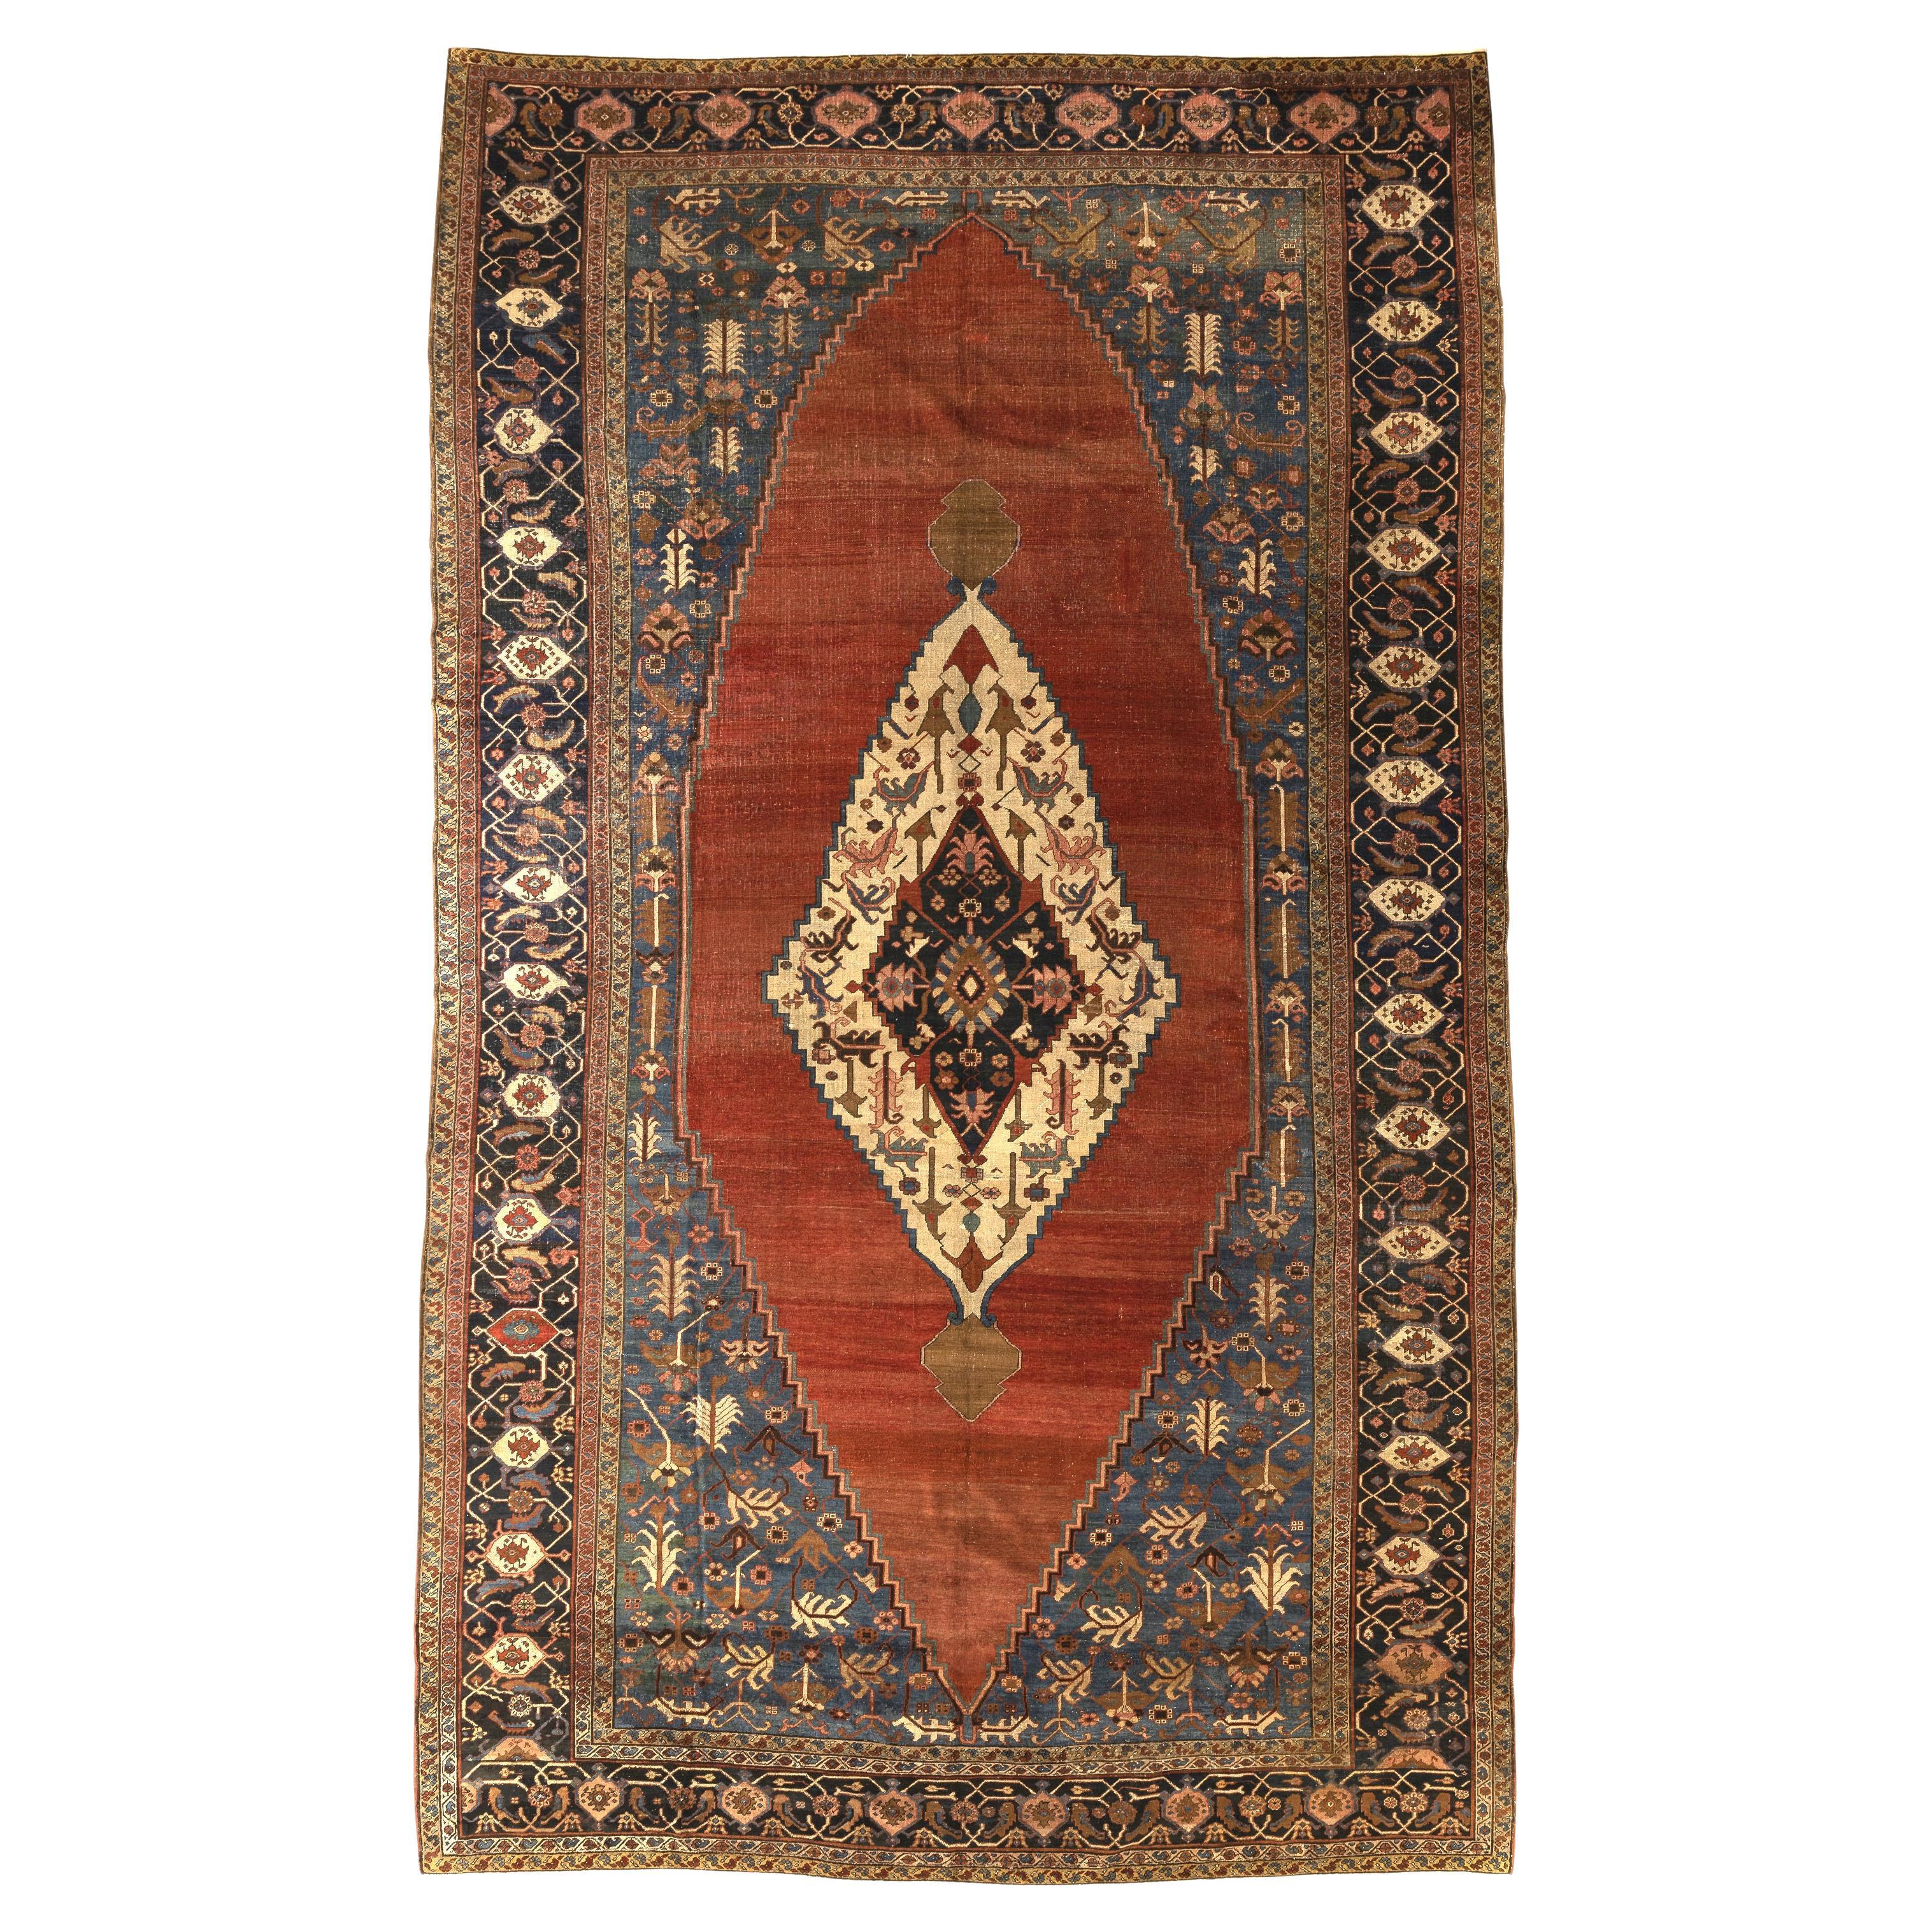 19th Antique Persian Serapi Palatial Size Carpet